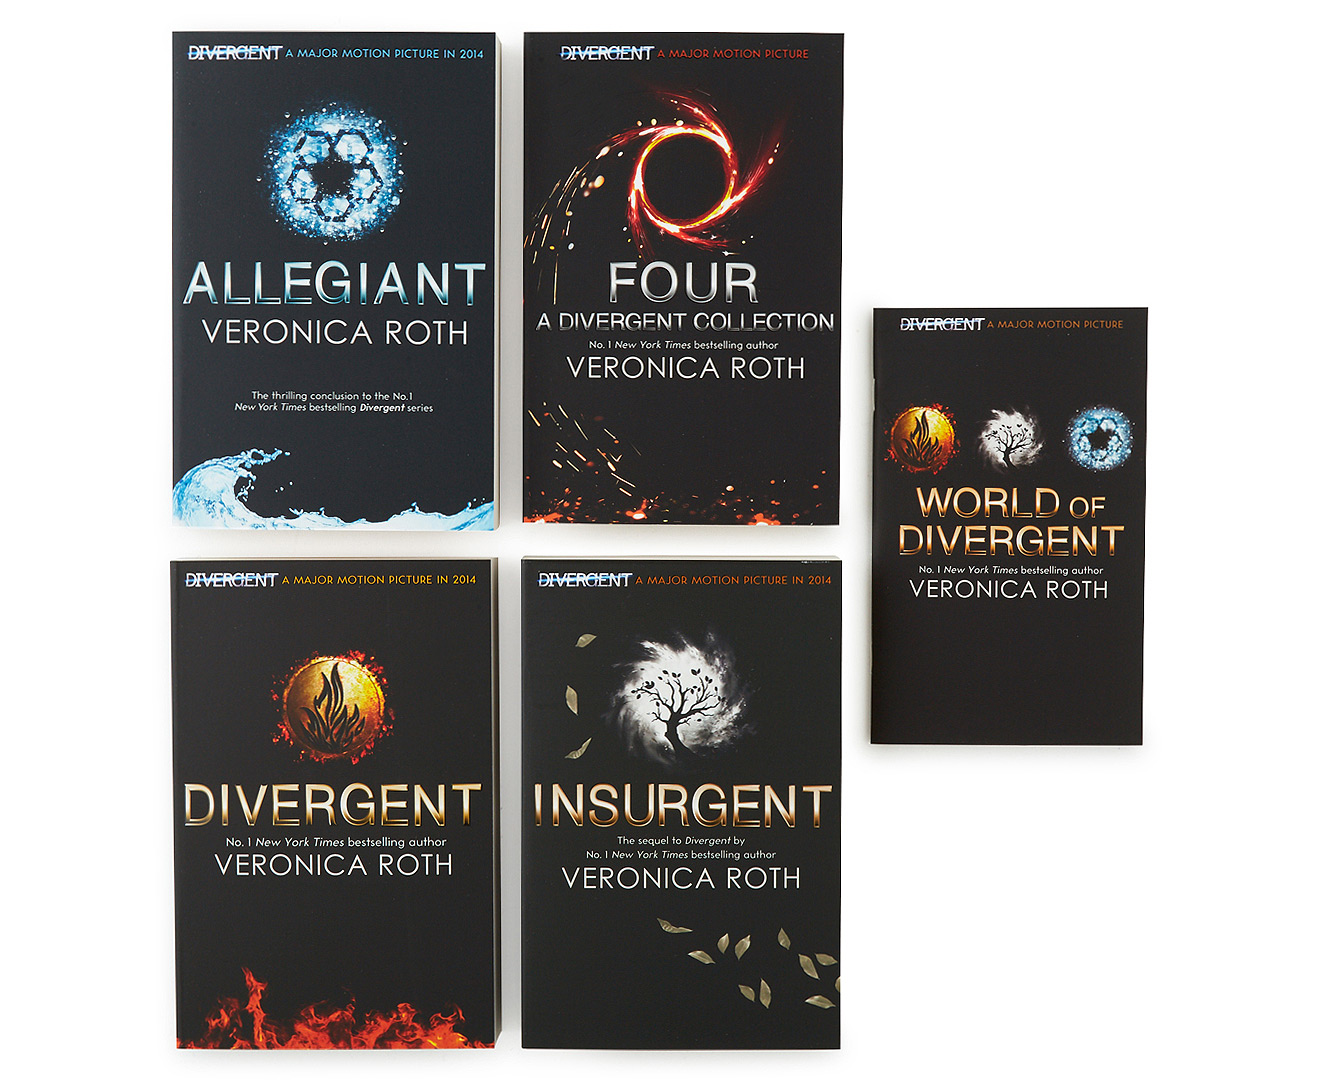 divergent series 4th book